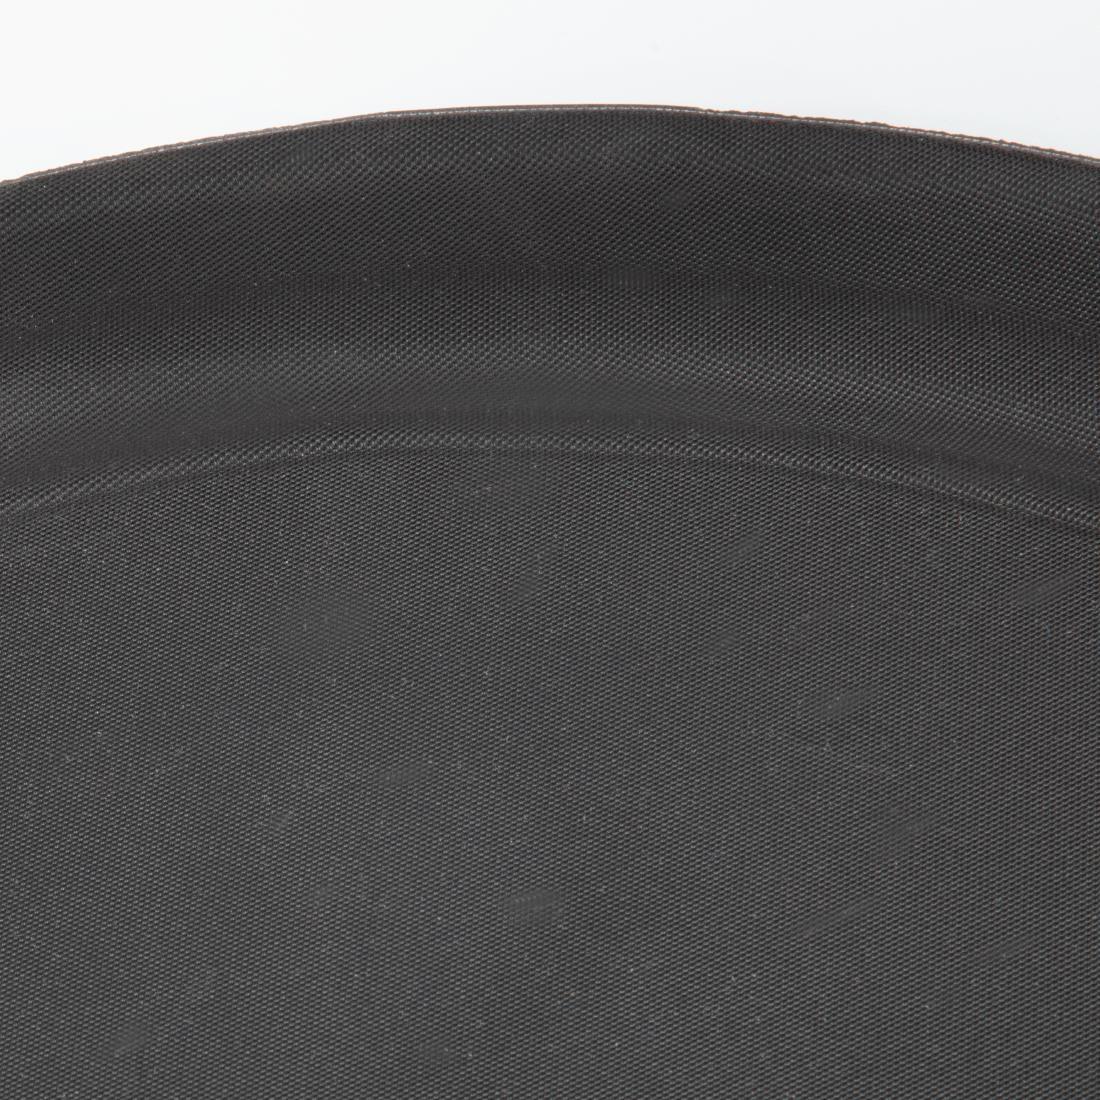 Olympia Kristallon Polypropylene Oval Non-Slip Tray Black 685mm - C162  - 5